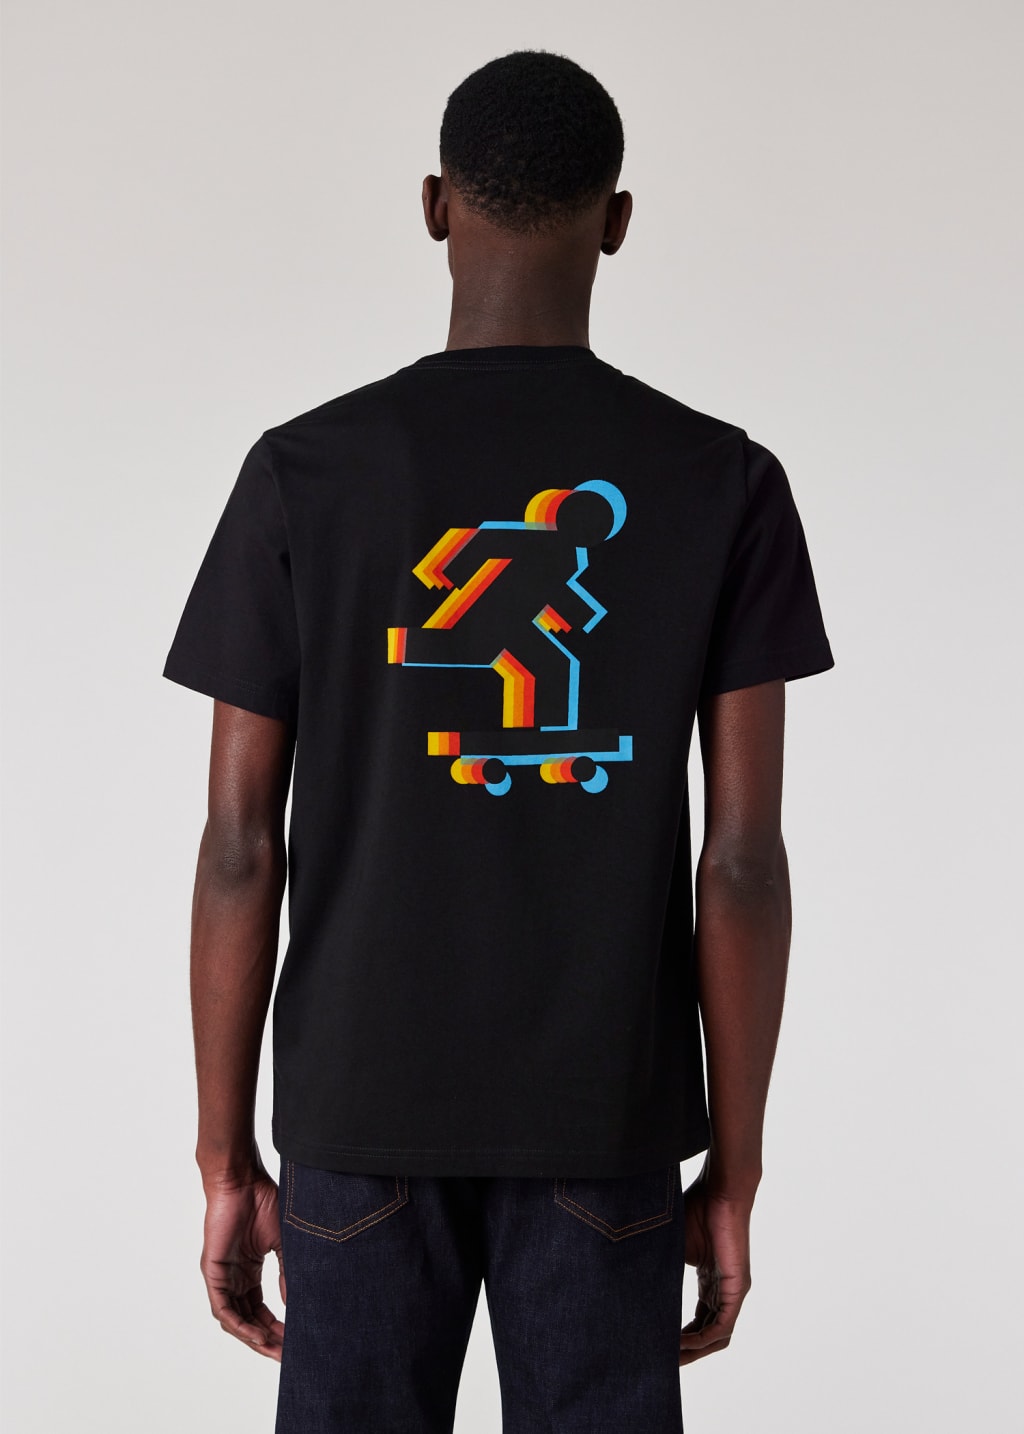 Model view - 'Skater' Print T-Shirt